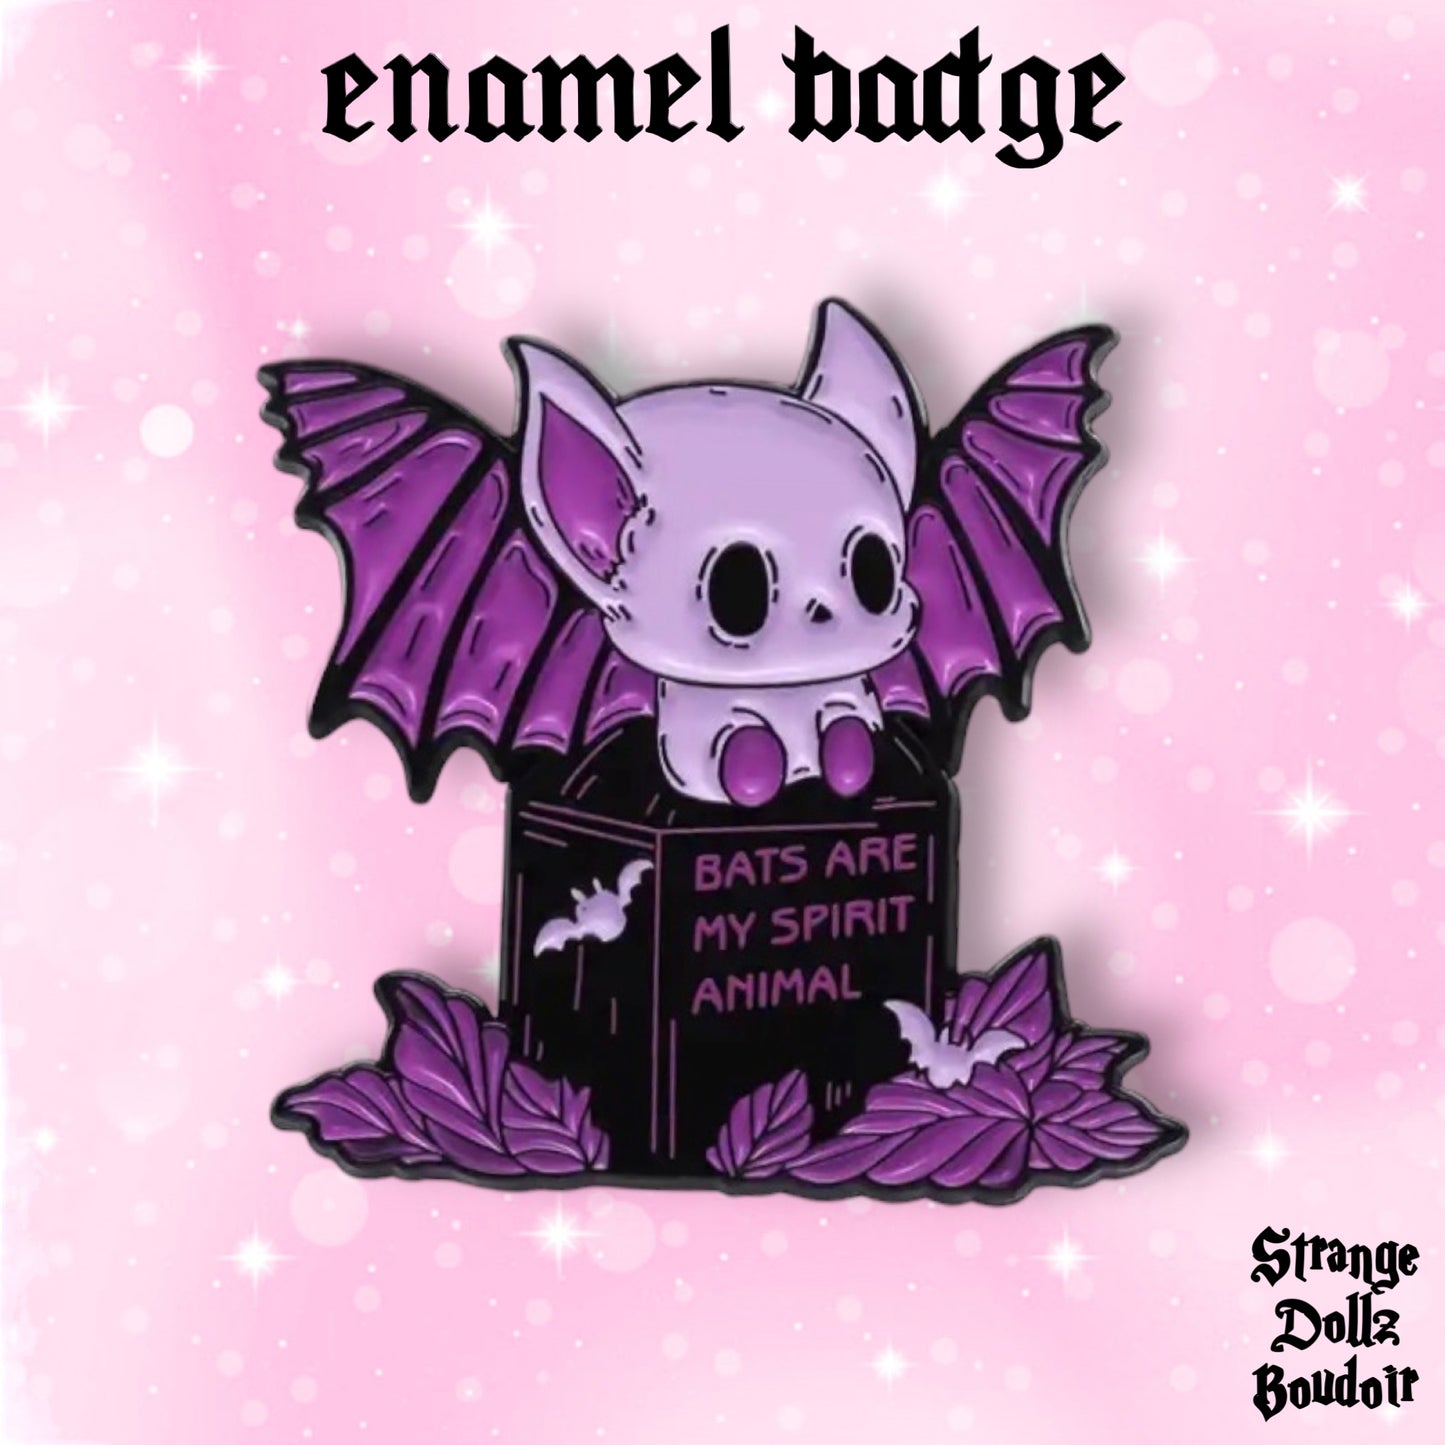 Cute bat enamel pin badge, Strange Dollz Boudoir